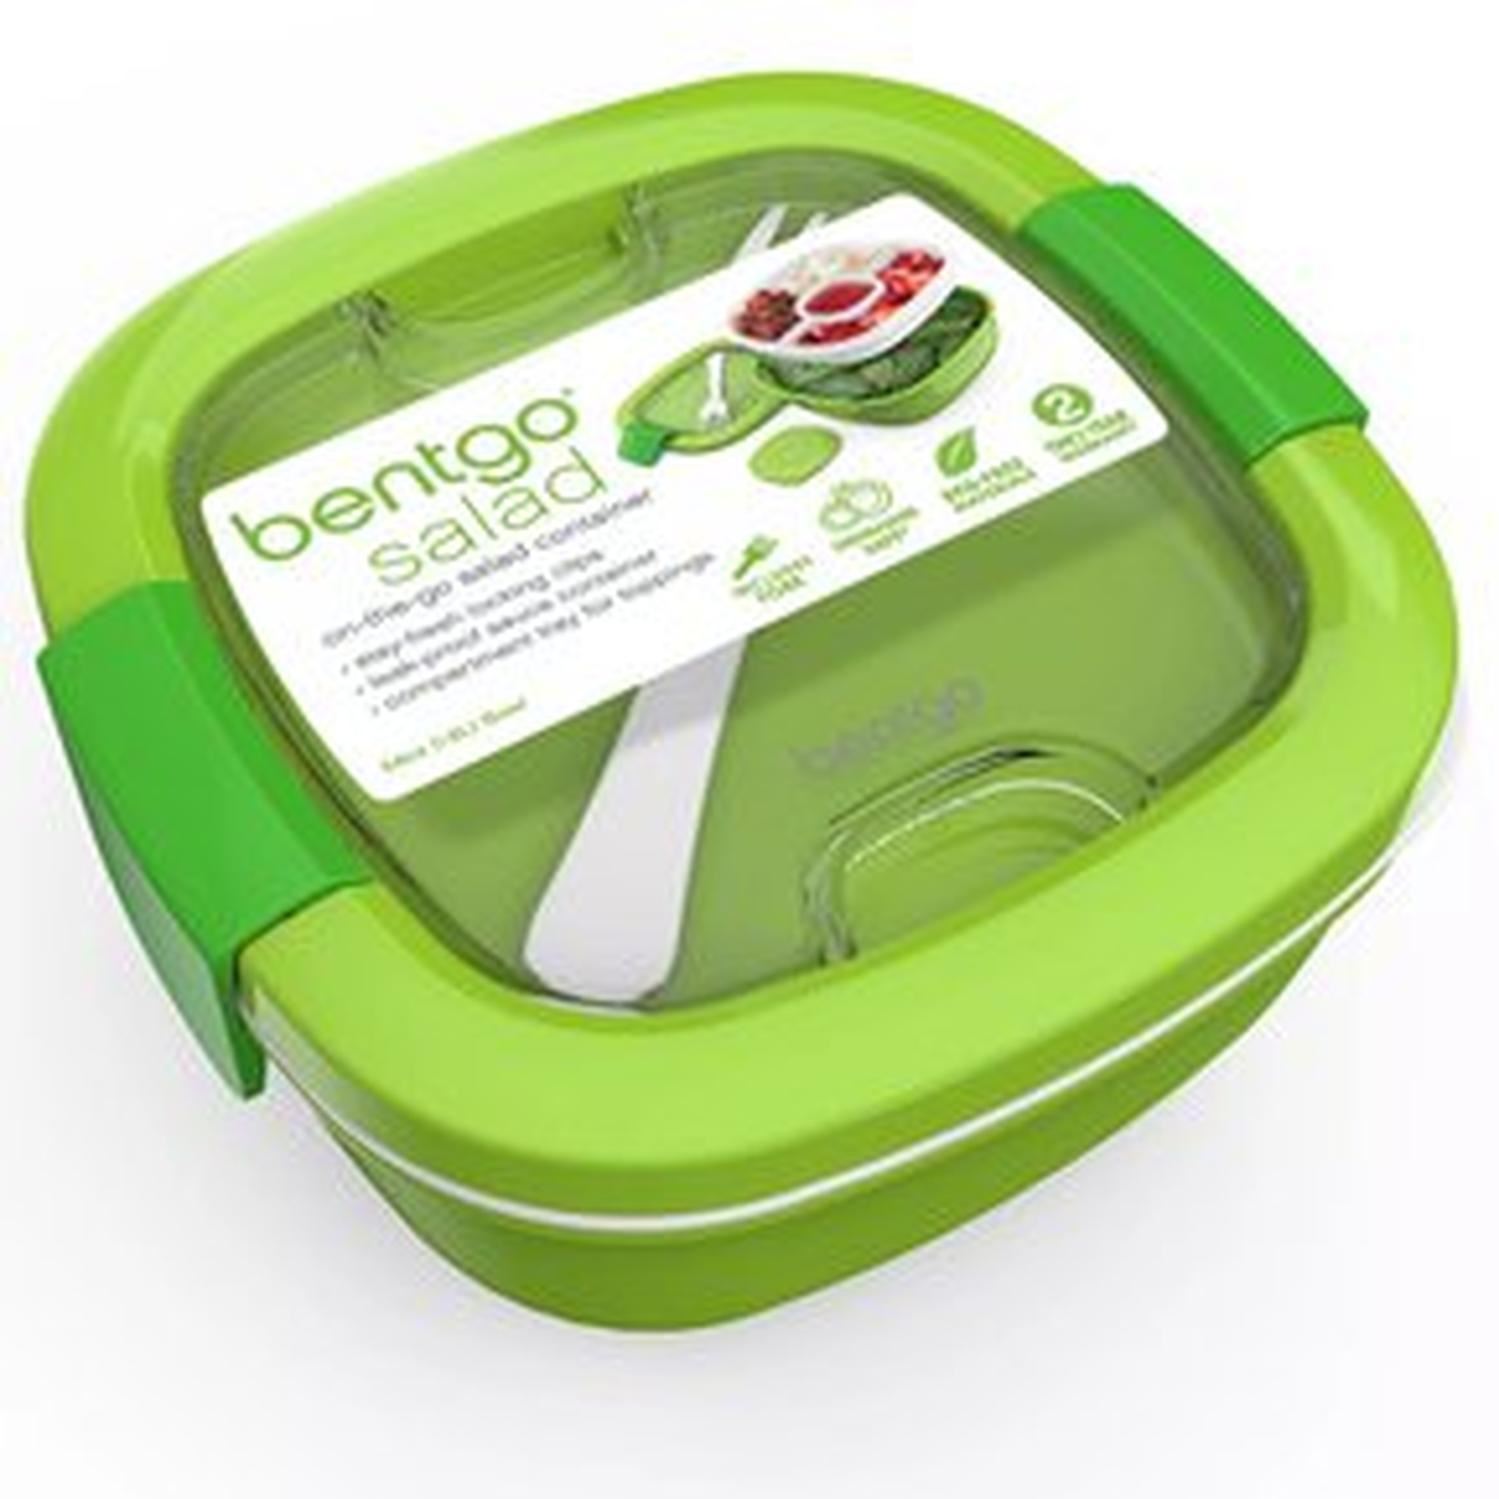 Lonchera bentgo fresh lunch box adultos - verde GENERICO